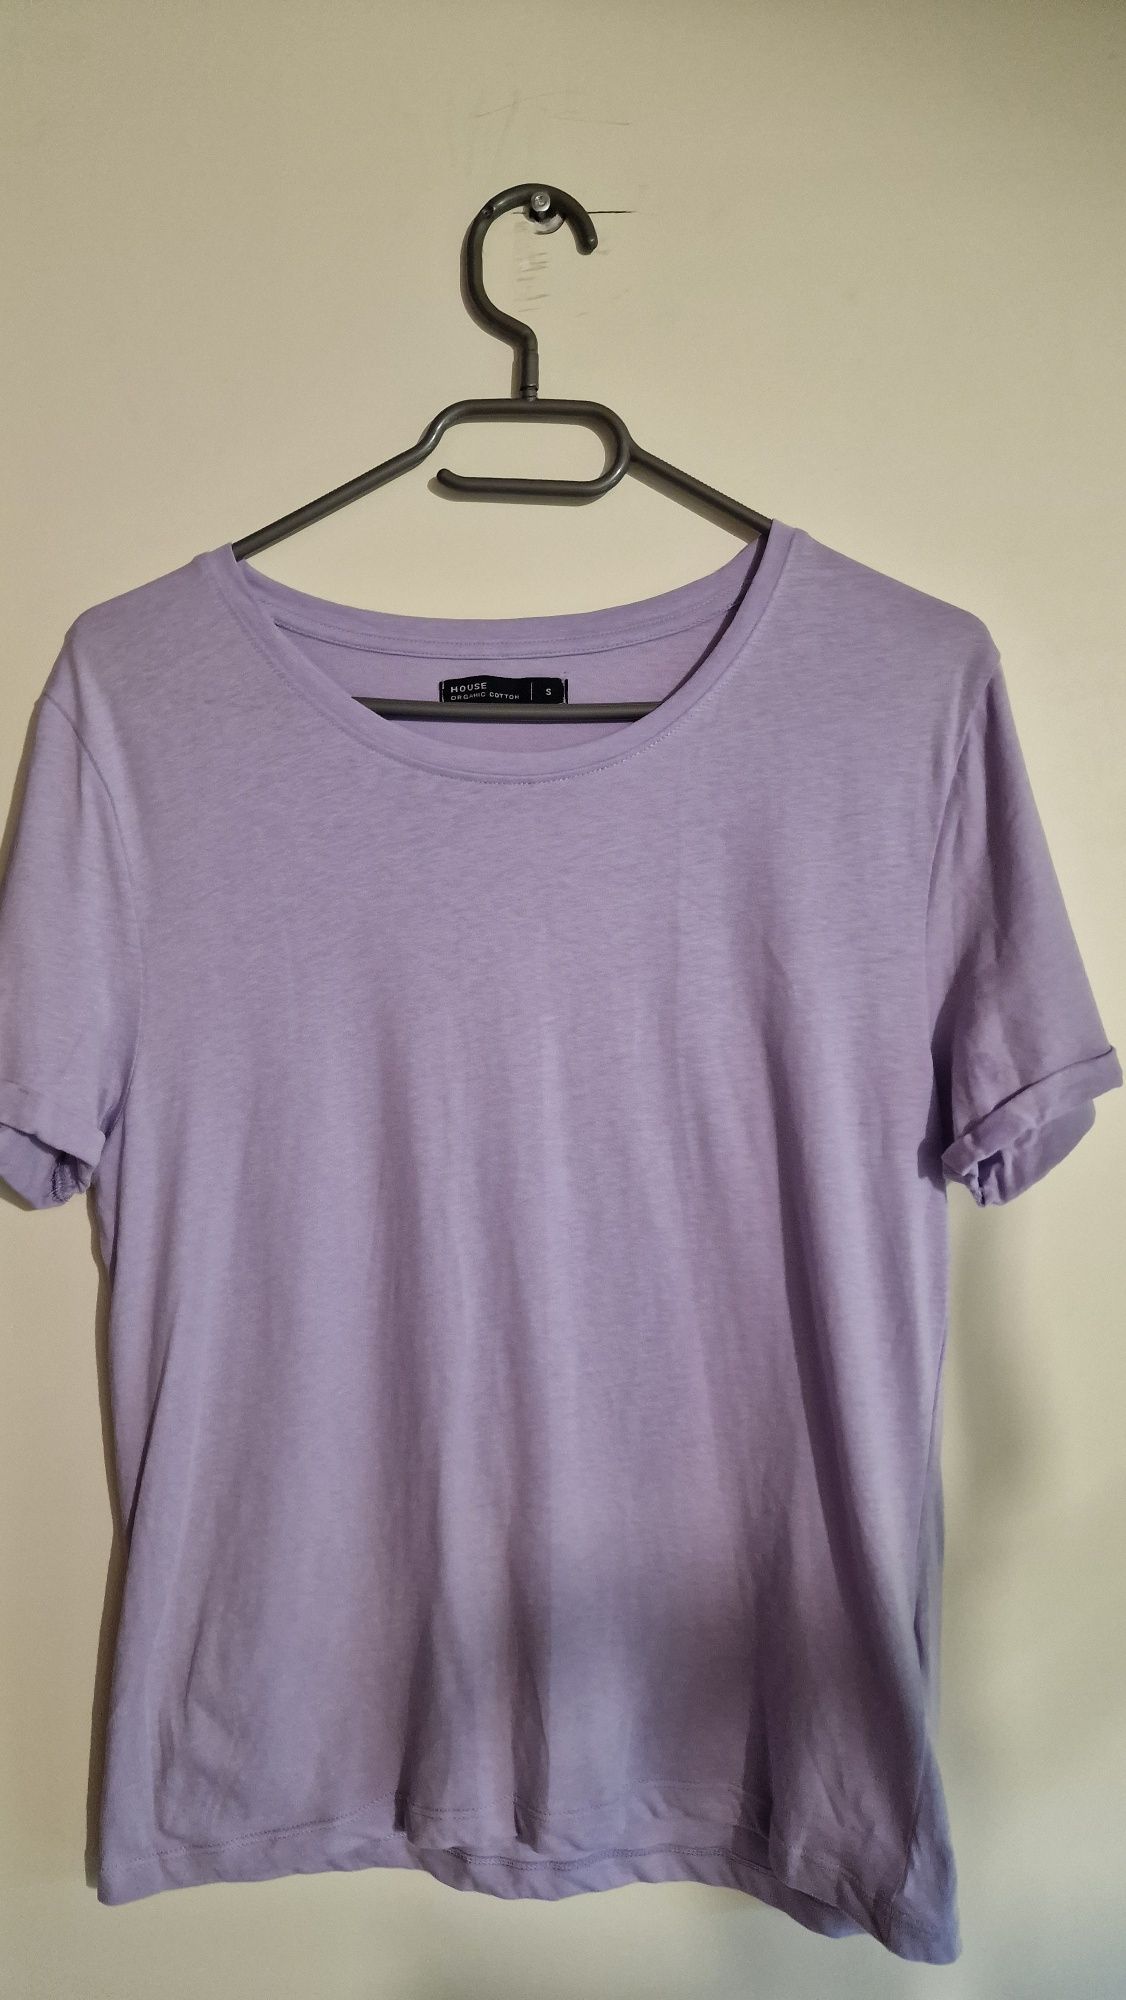 T-shirt koszulka damska House bawełna organiczna 36 S pastelowa